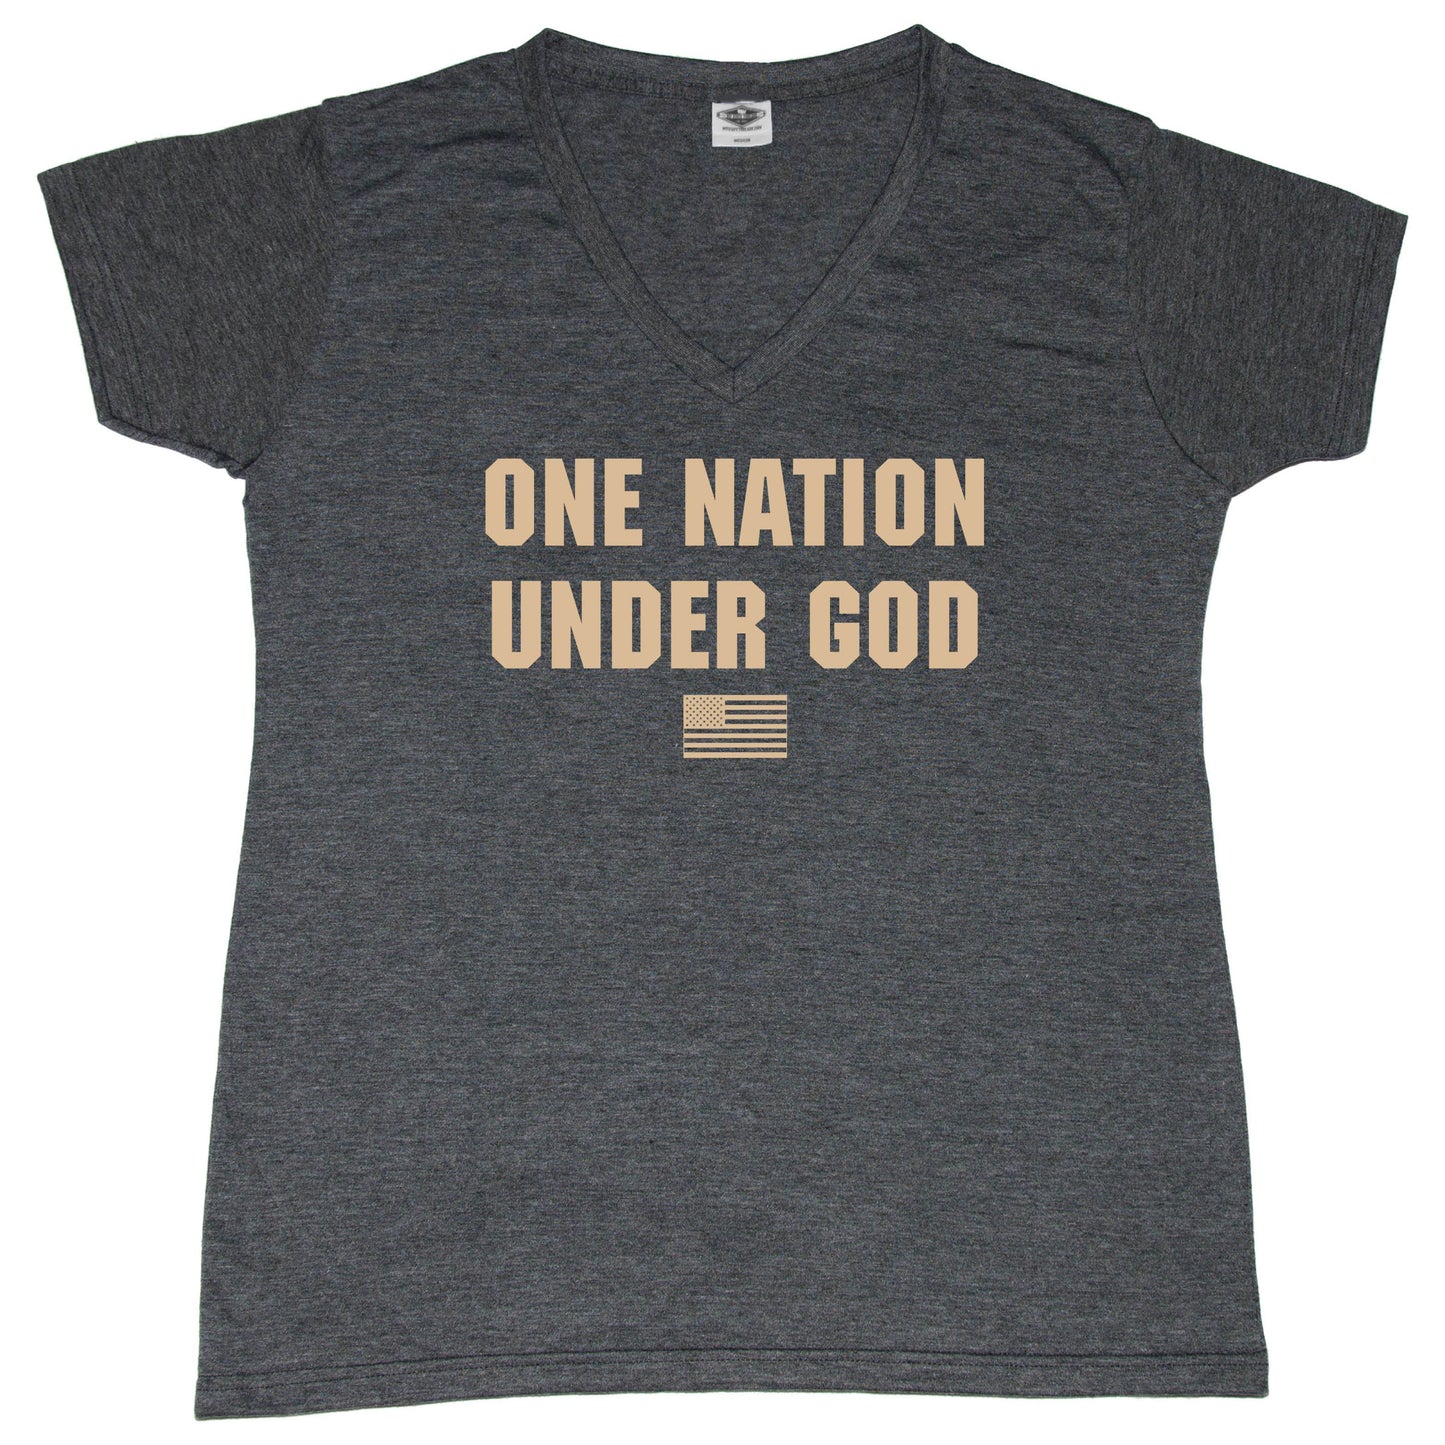 One Nation Under God - Ladies' Tee